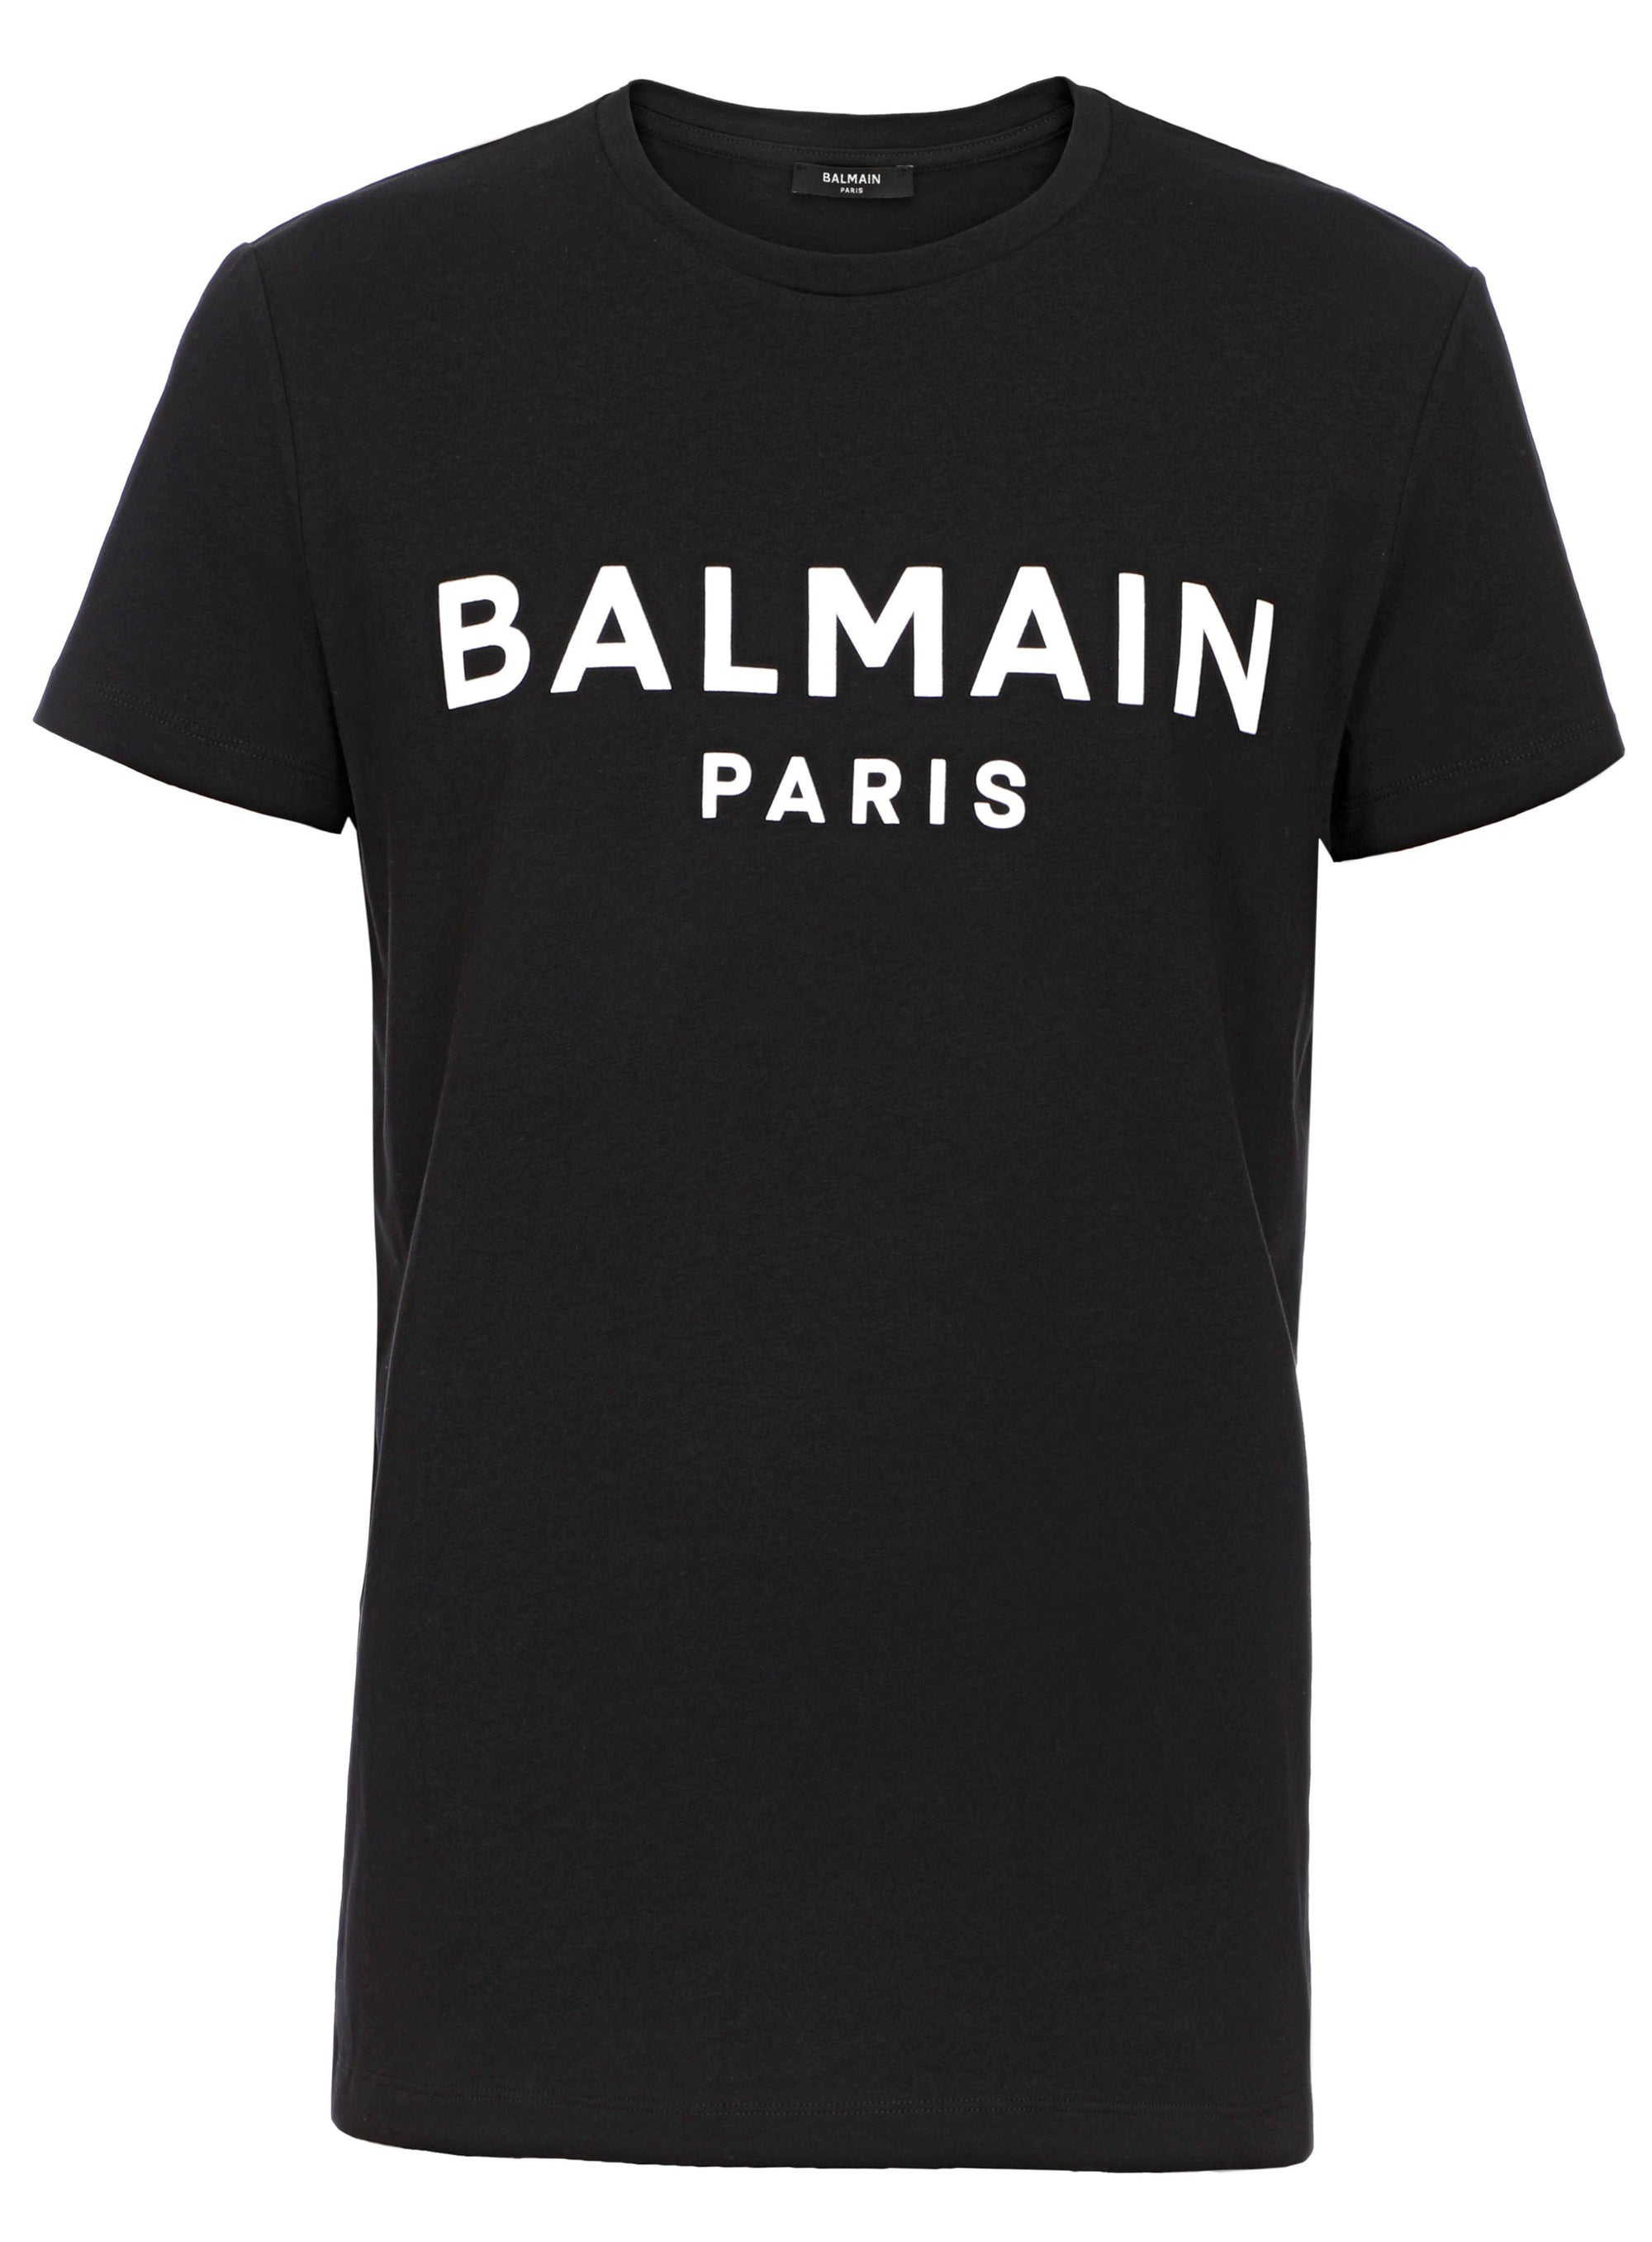 Balmain Printed T-Shirt - Classic Fit - Black & White